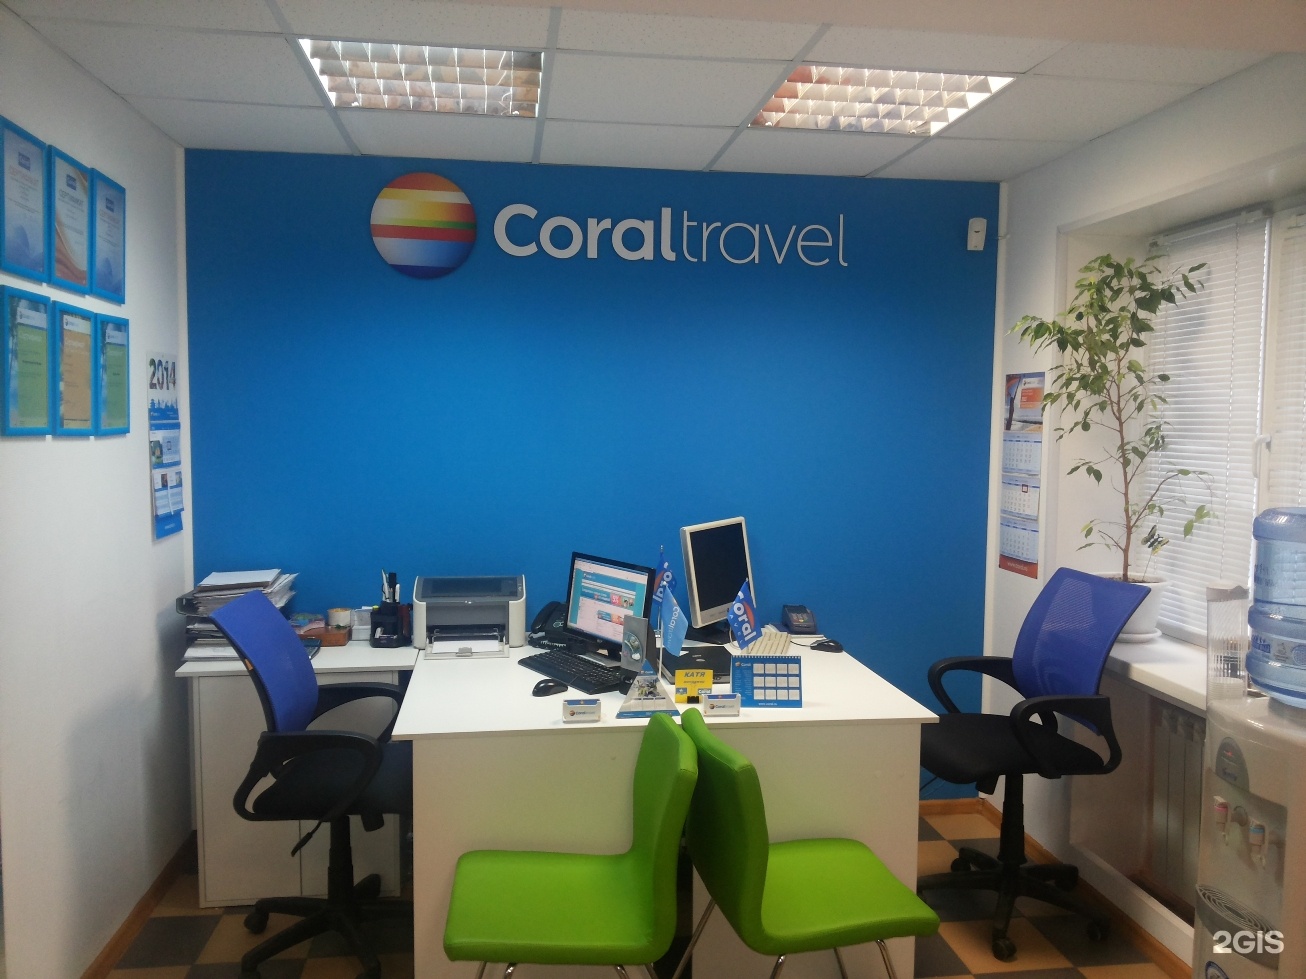 Travel office. Офис турагентства. Coral Travel офис. Офис туристического агентства. Дизайн офиса турфирмы.